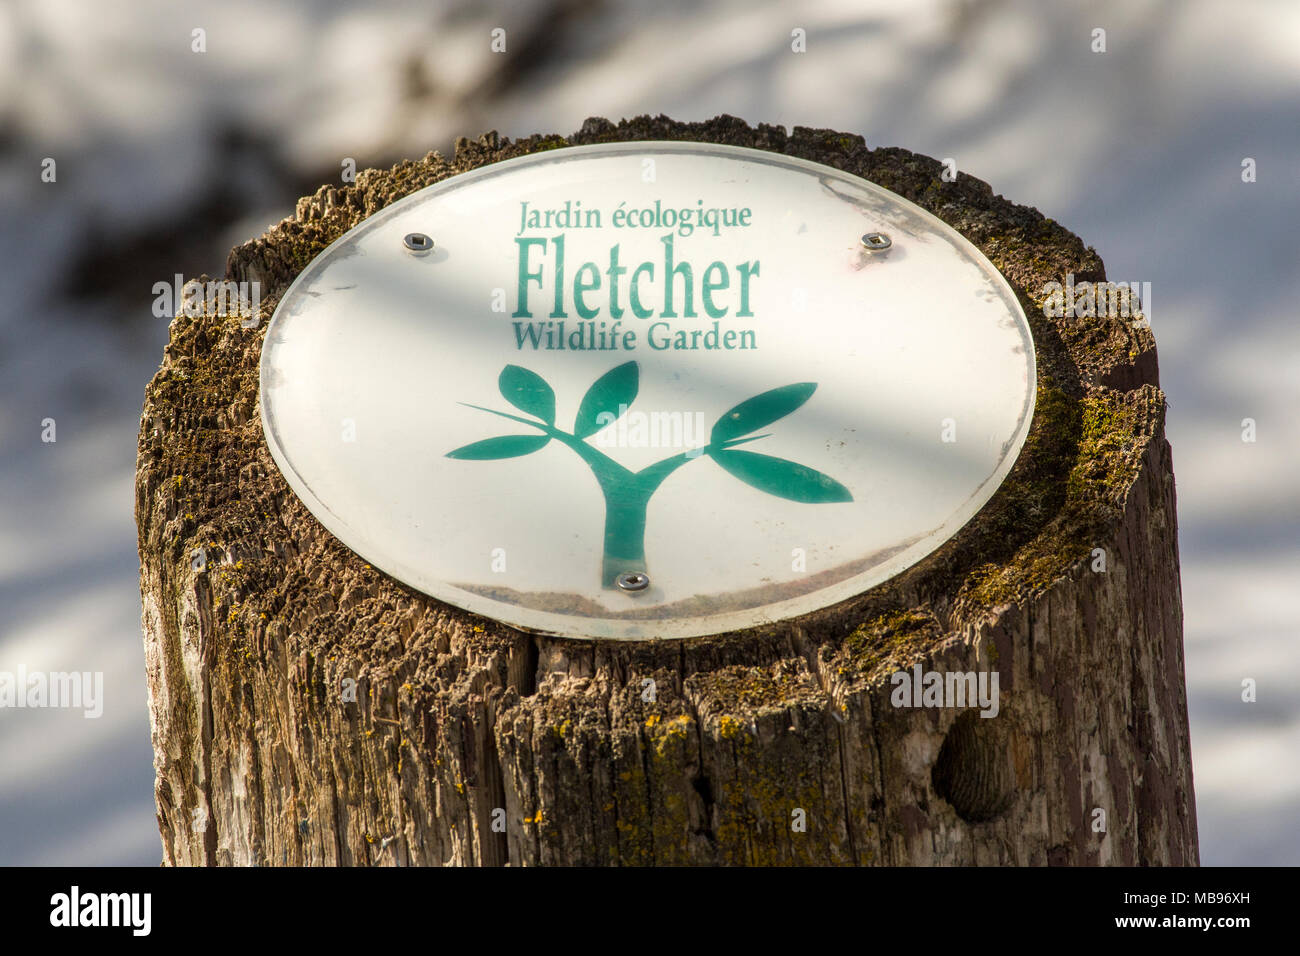 Fletcher Wildlife Garden sign on post Stock Photo